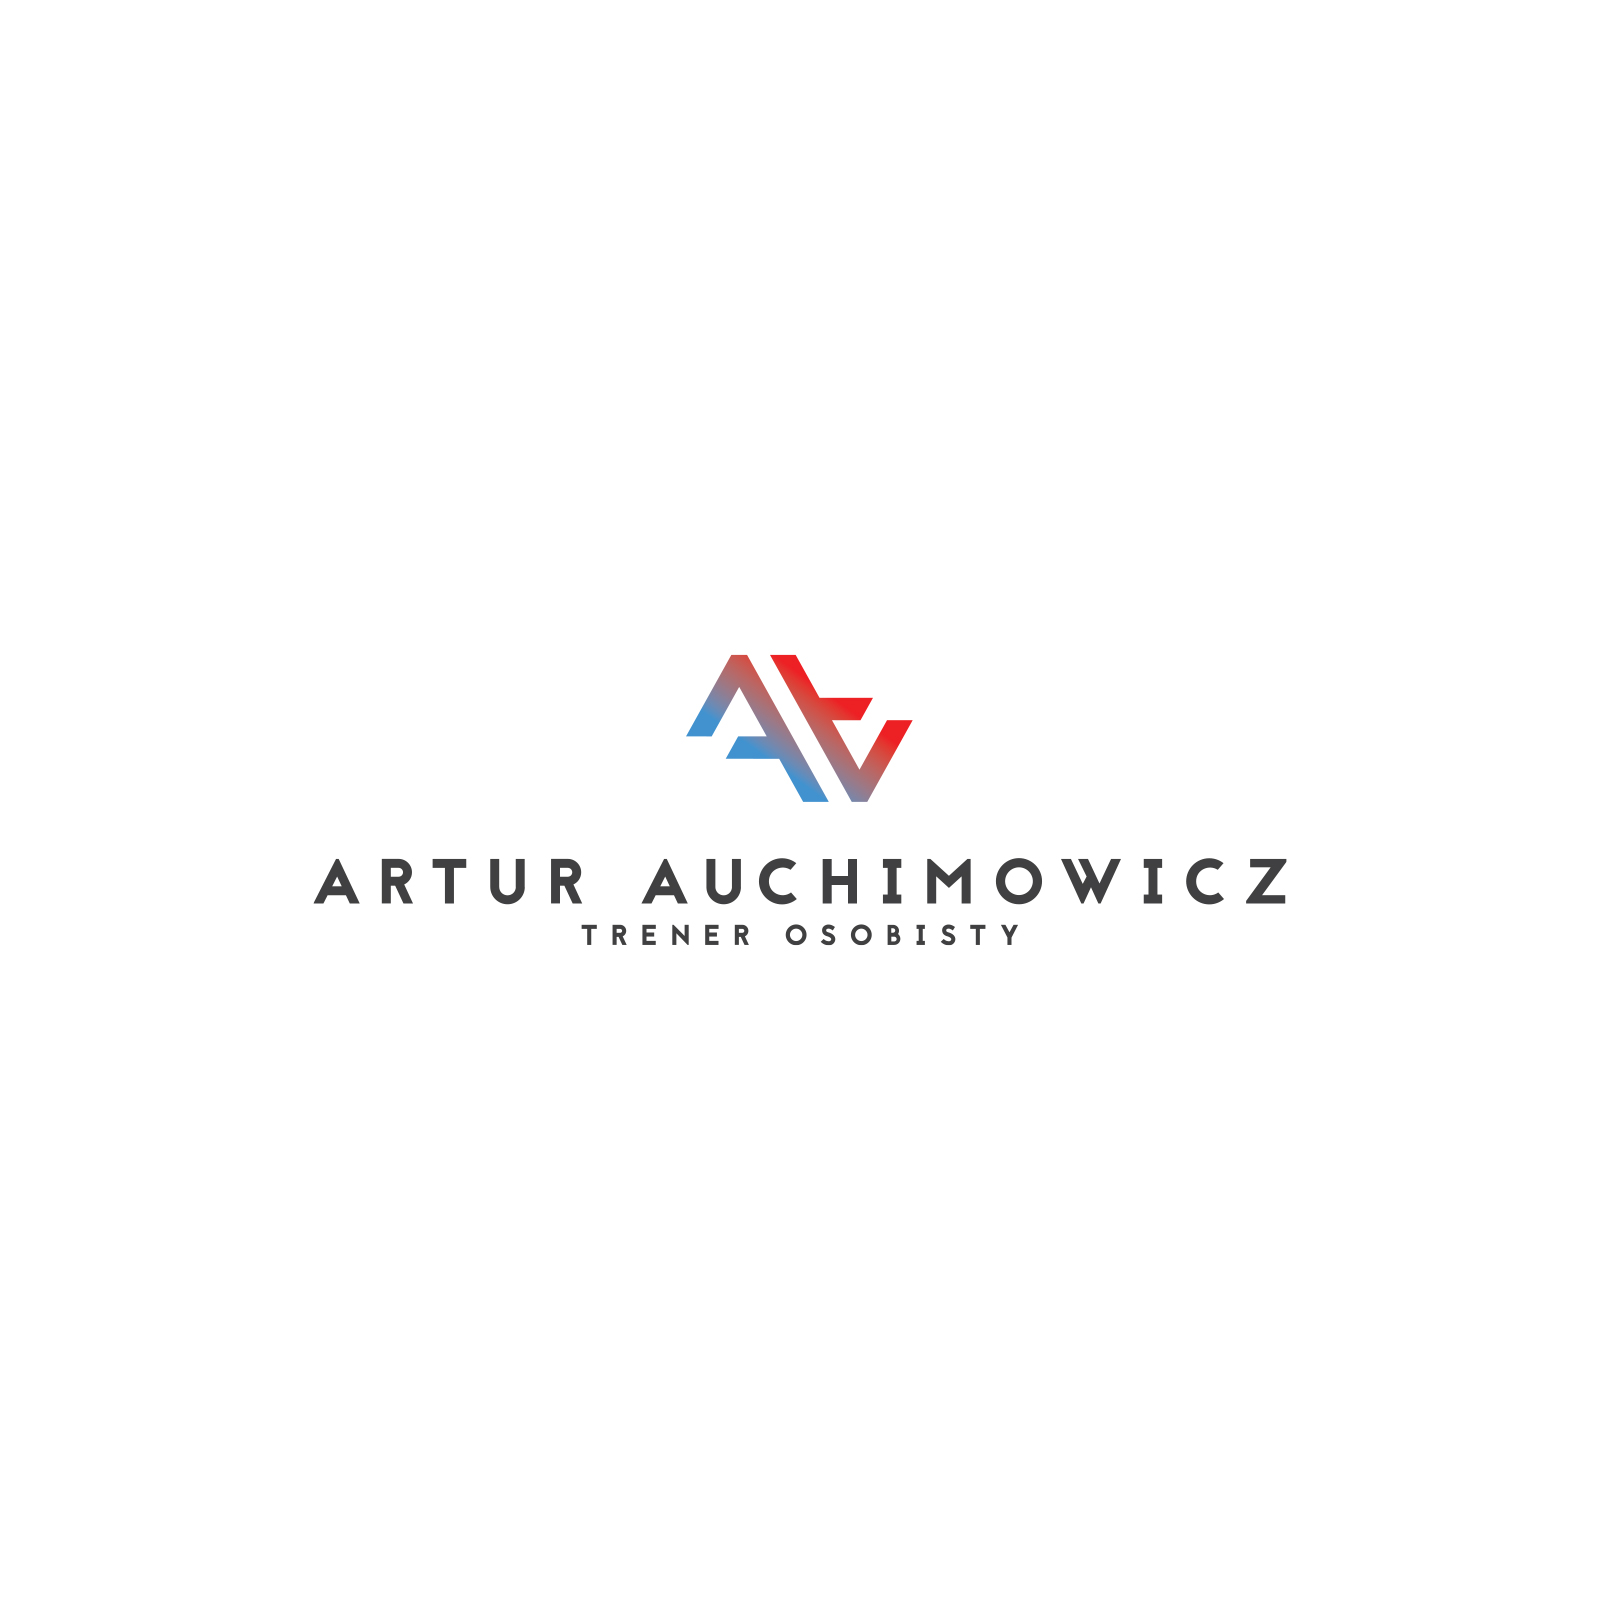 http://spokoto.pl/wp-content/uploads/2020/03/ArturAuchimowicz_logo.jpg